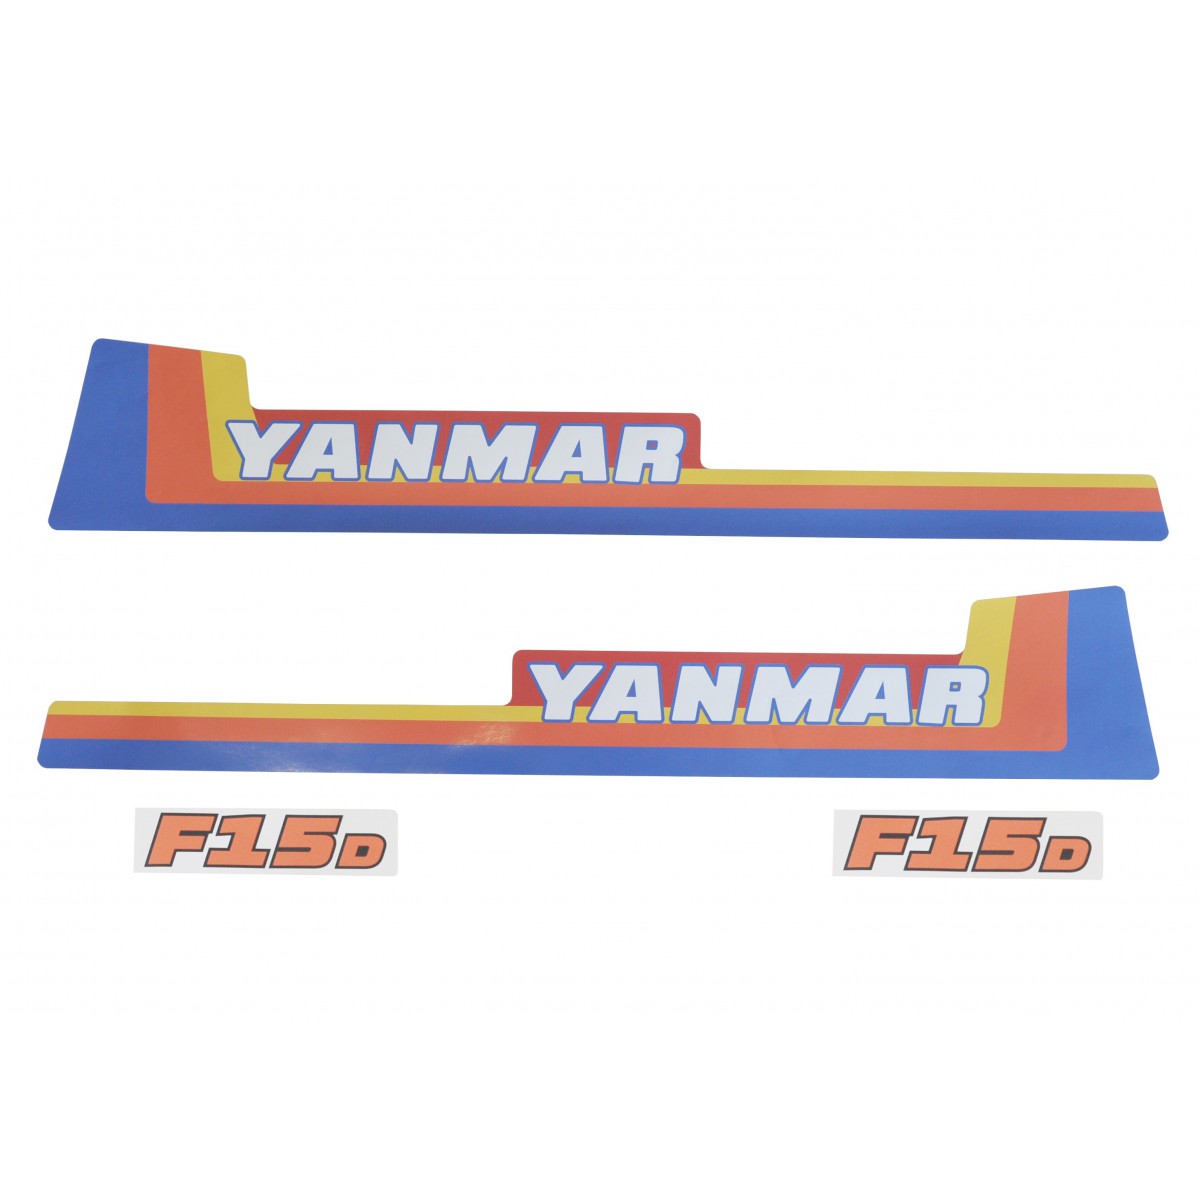 Autocollants Yanmar F15D